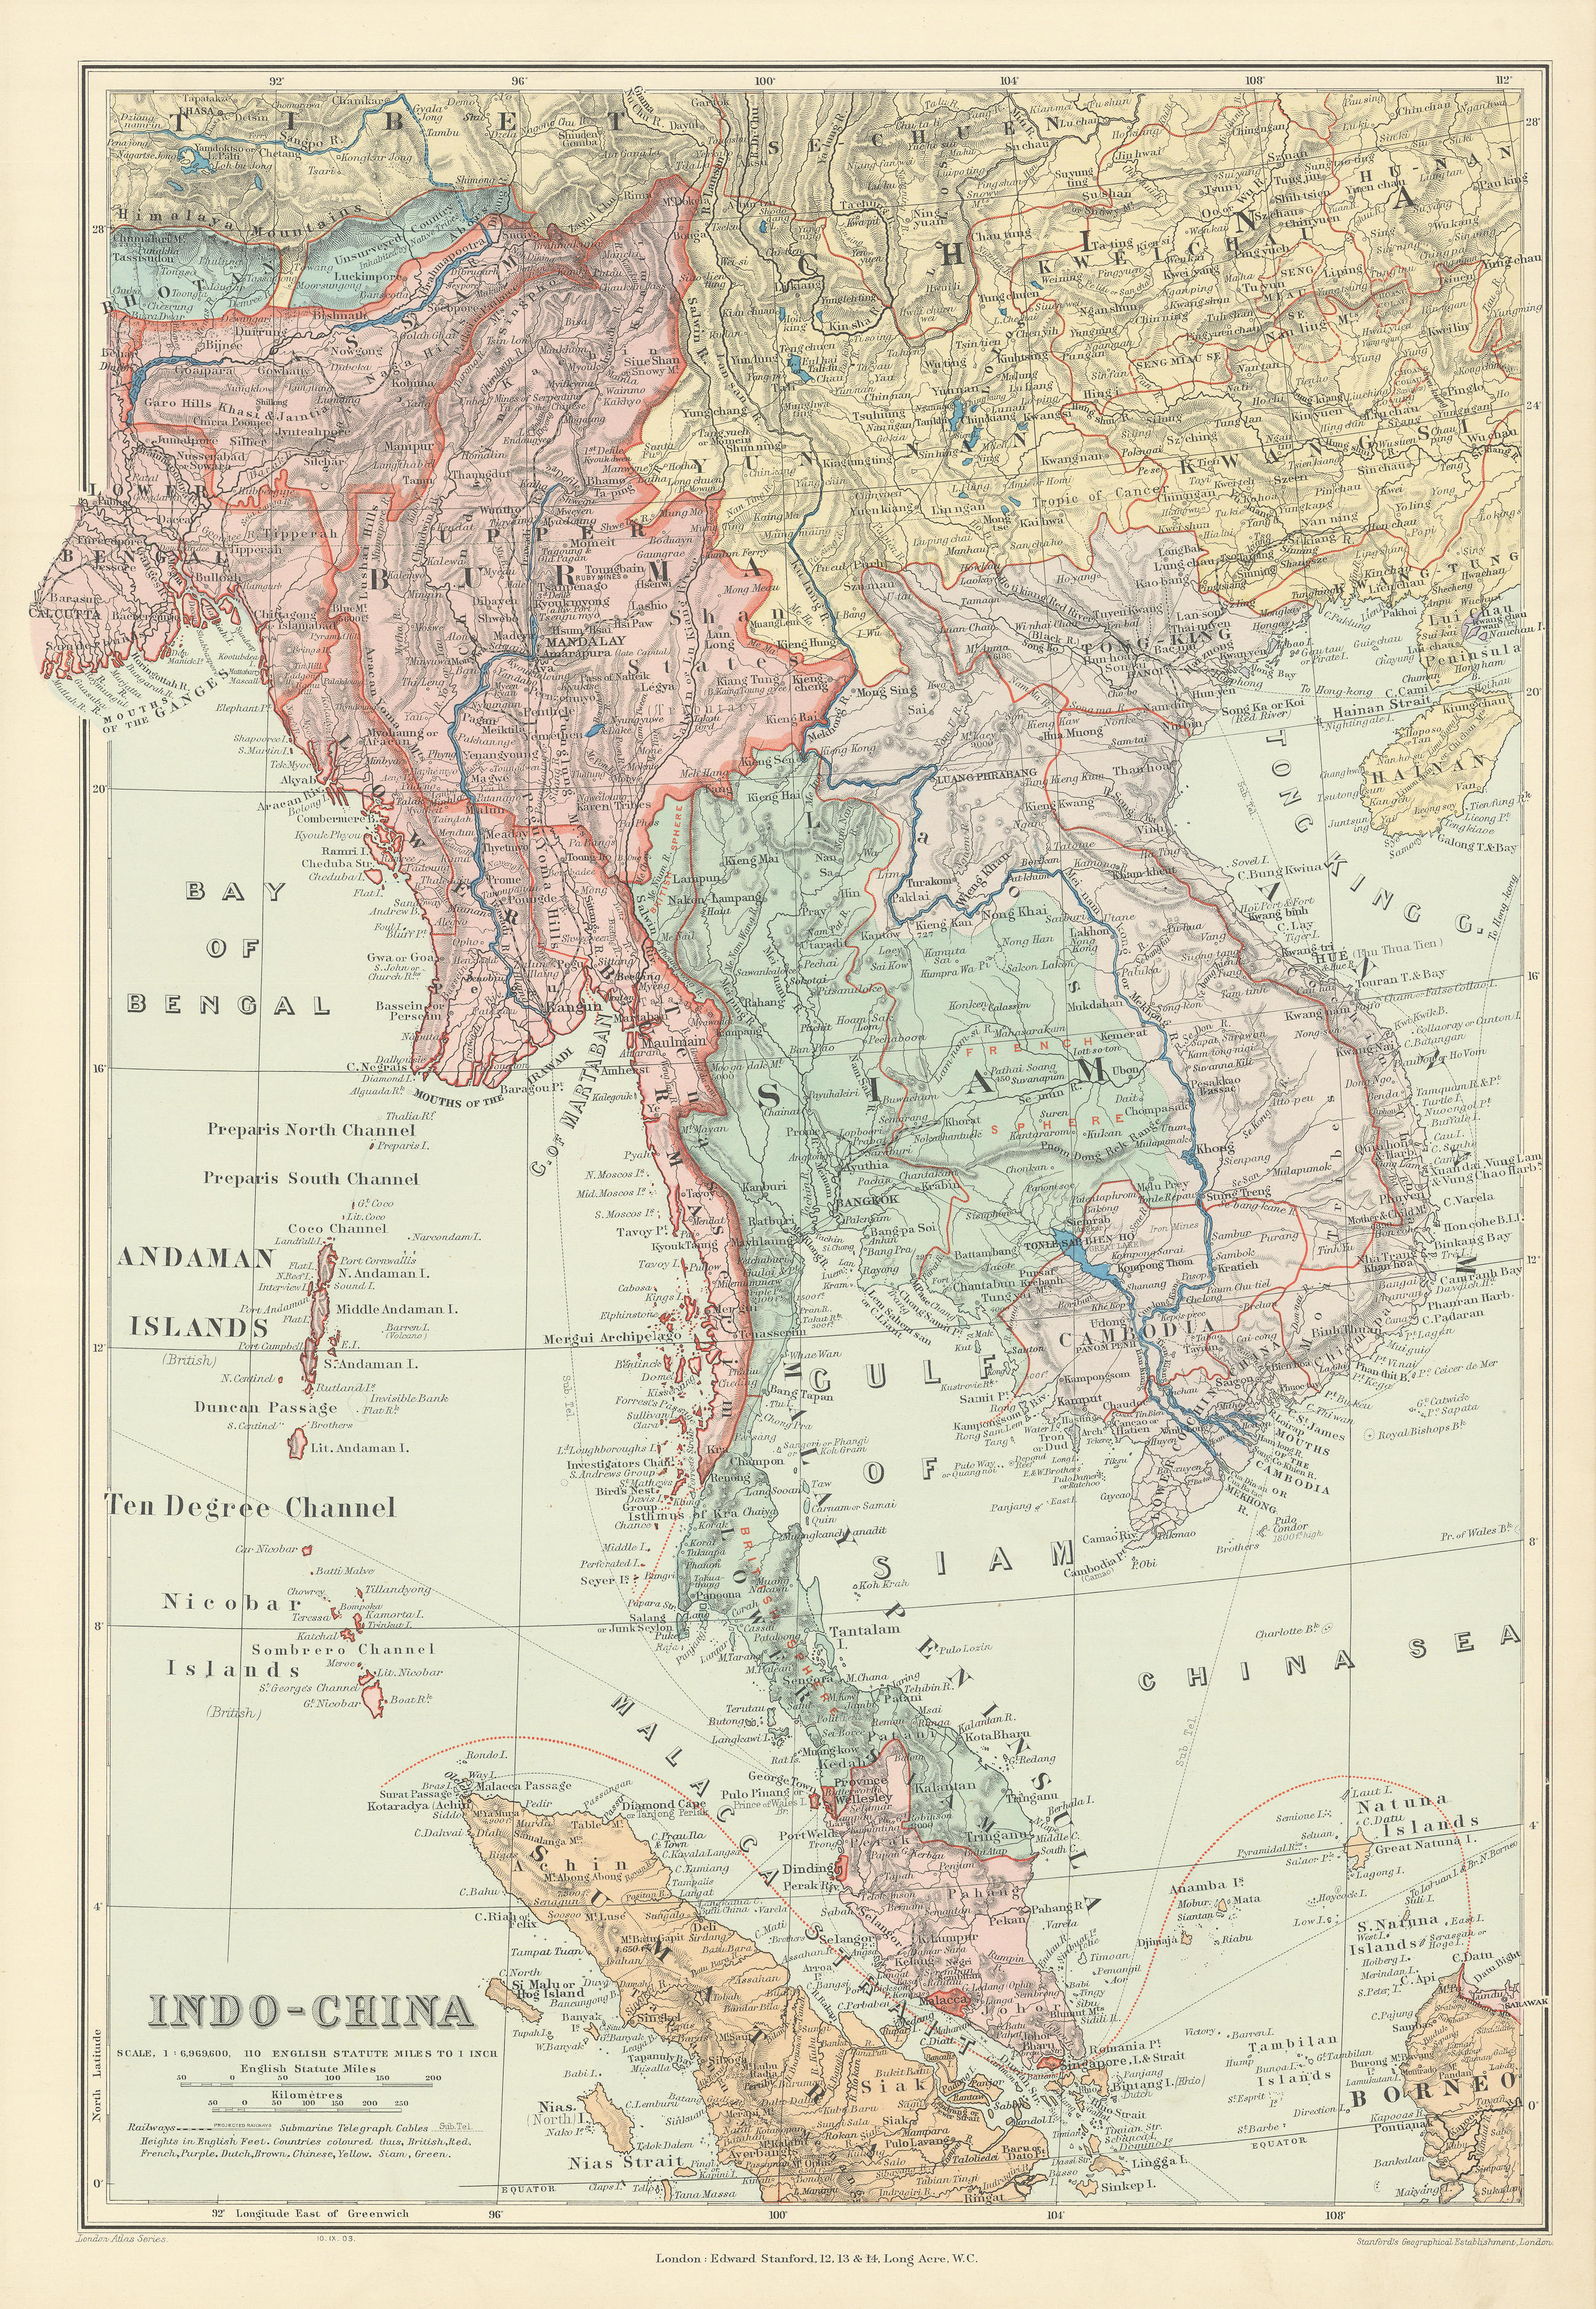 Associate Product Indo-China. Indochina. Siam Annam Burma Thailand Cambodia. STANFORD 1904 map